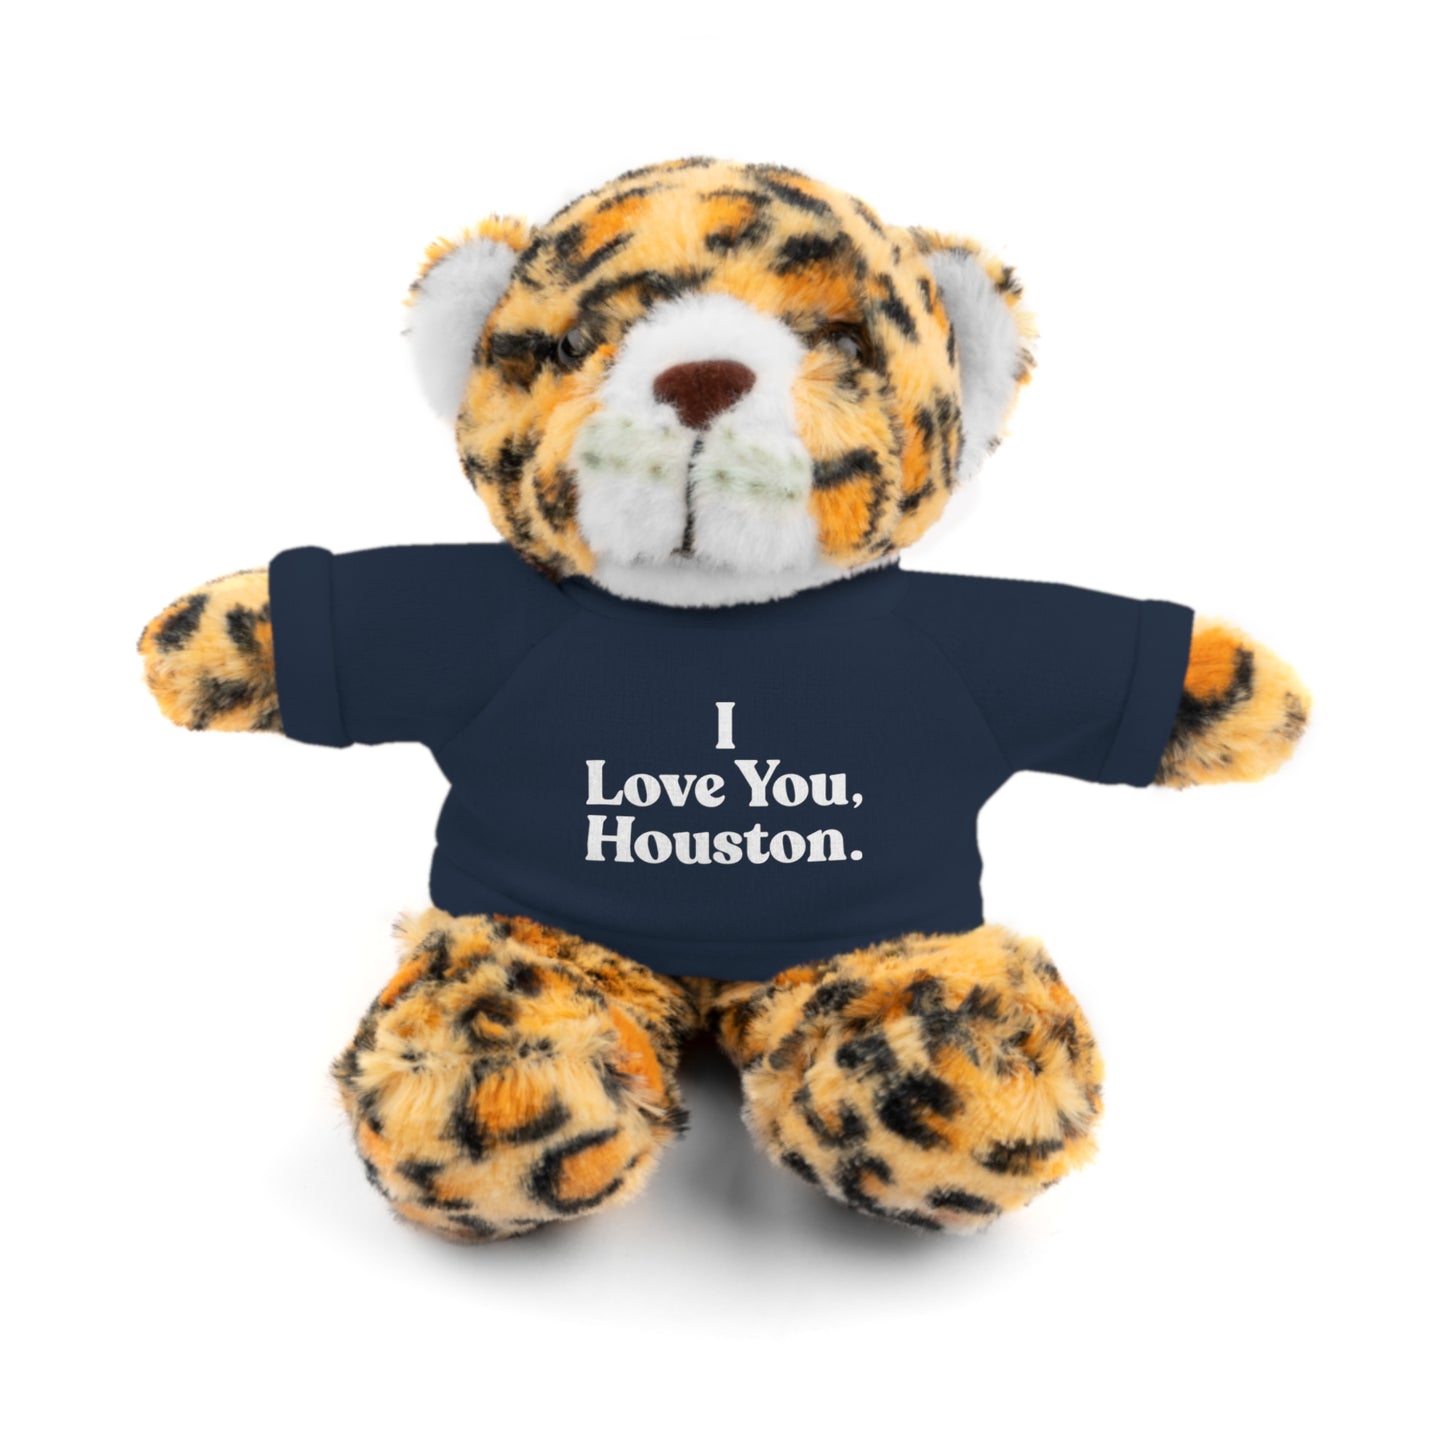 I Love You, Houston Stuffed Animal